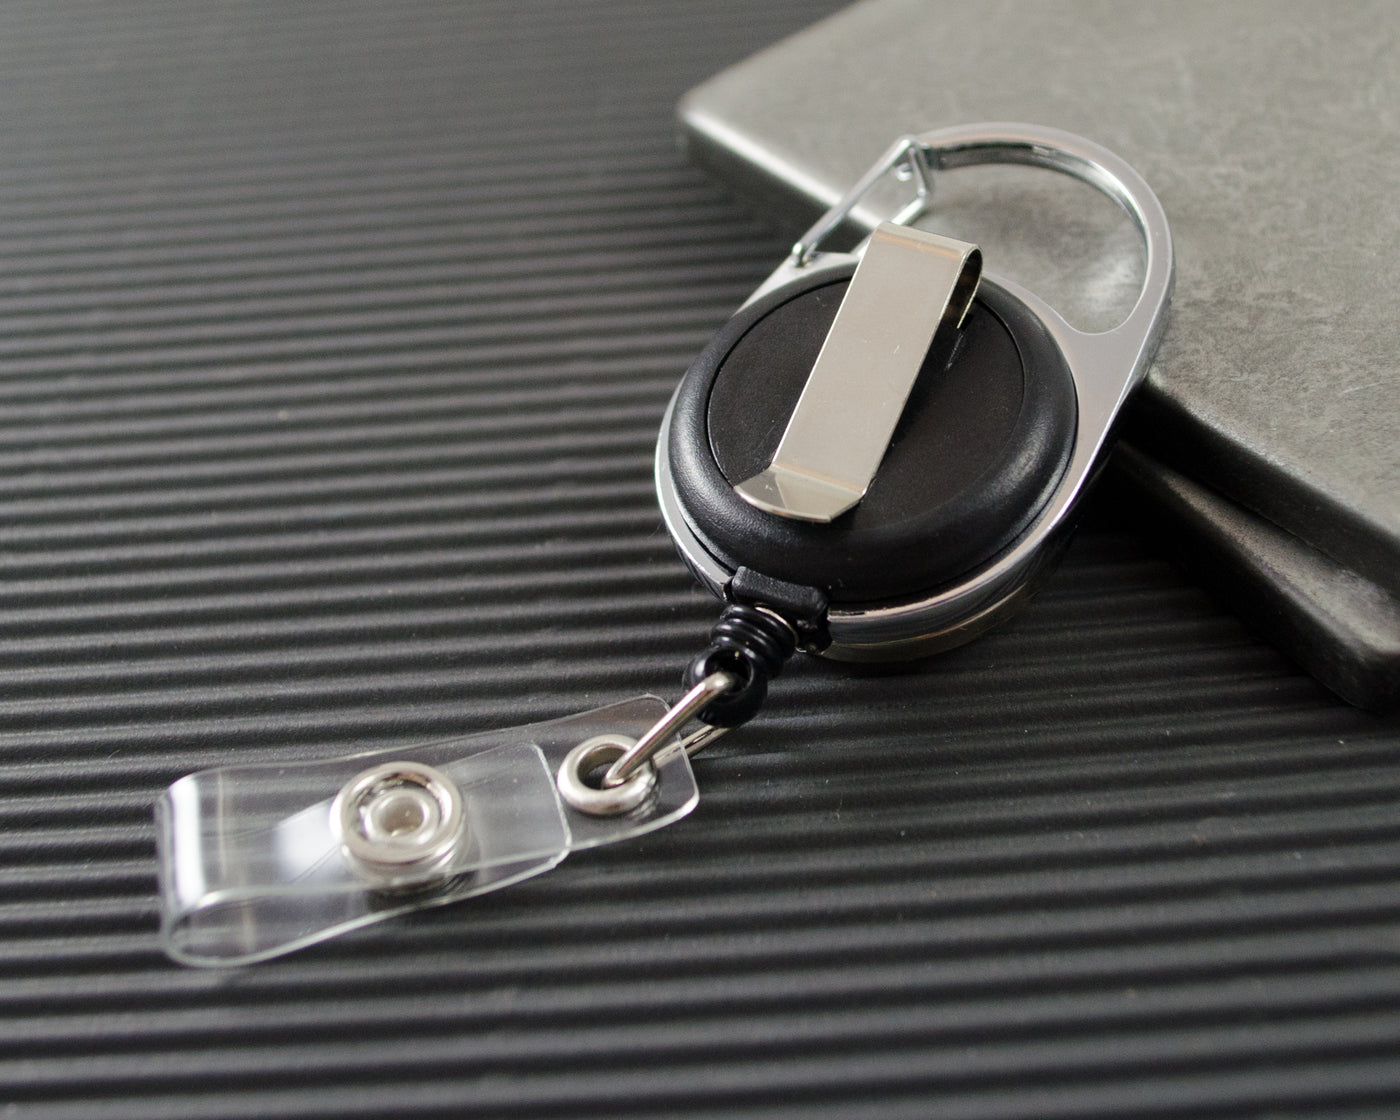 Dad Circuit Board Keychain or Badge Holder